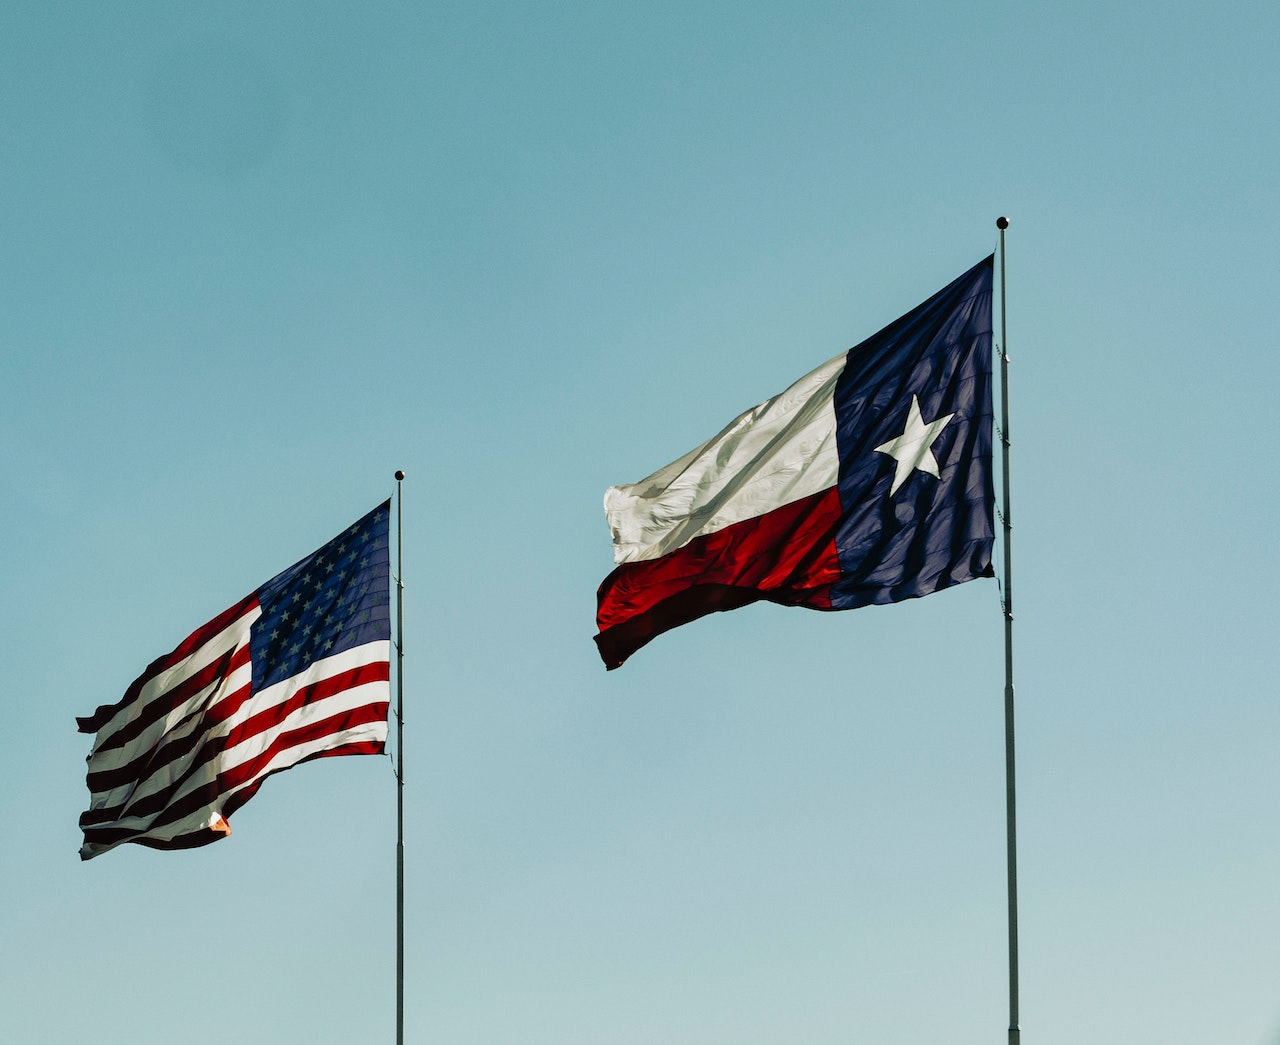 Reedville Texas Flags